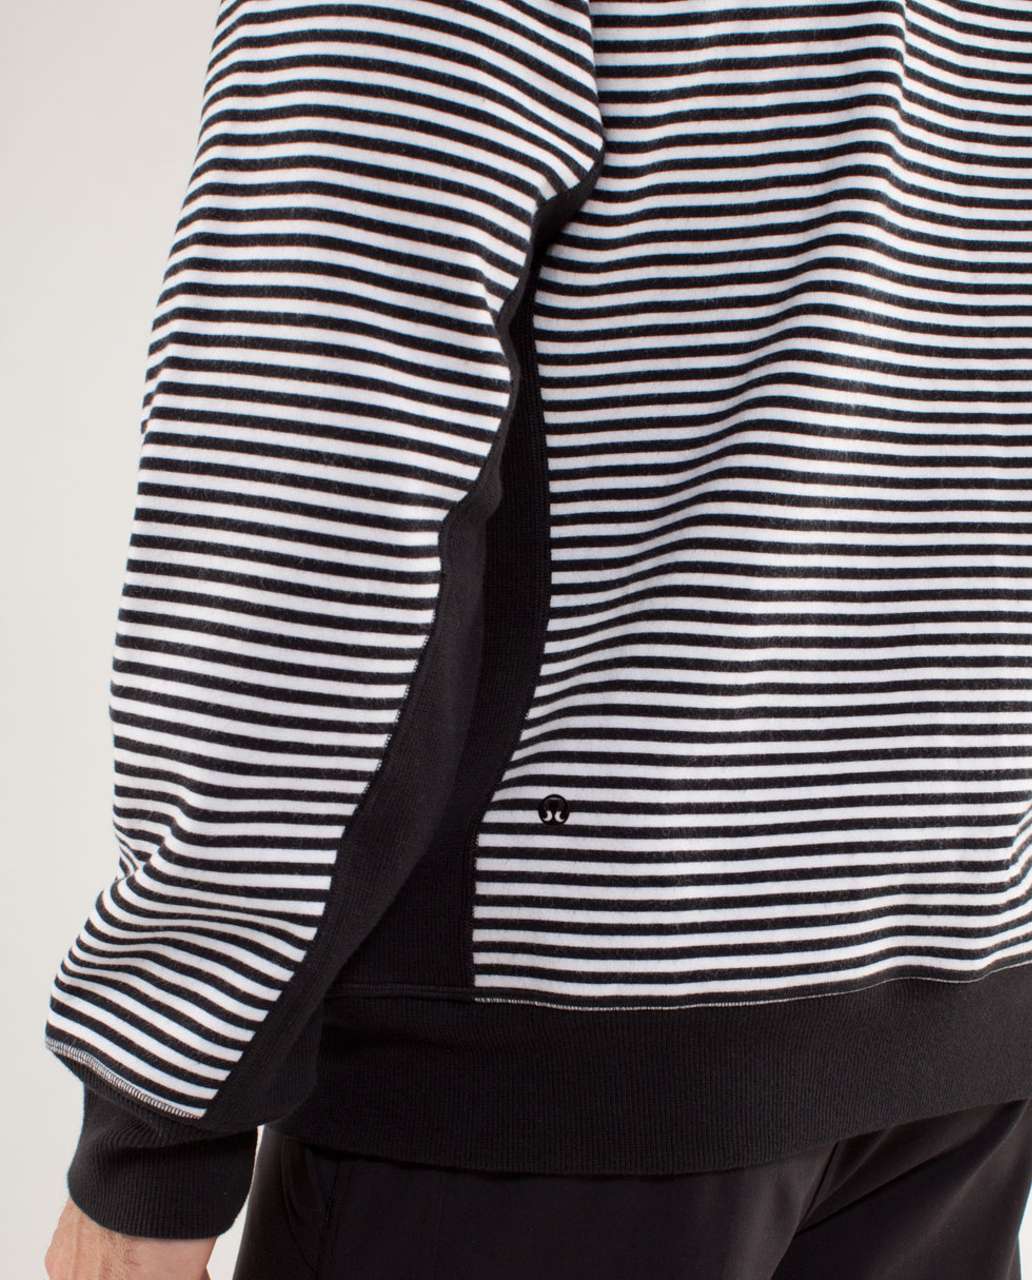 Lululemon Sequence Hoodie - Classic Stripe Printed White Black